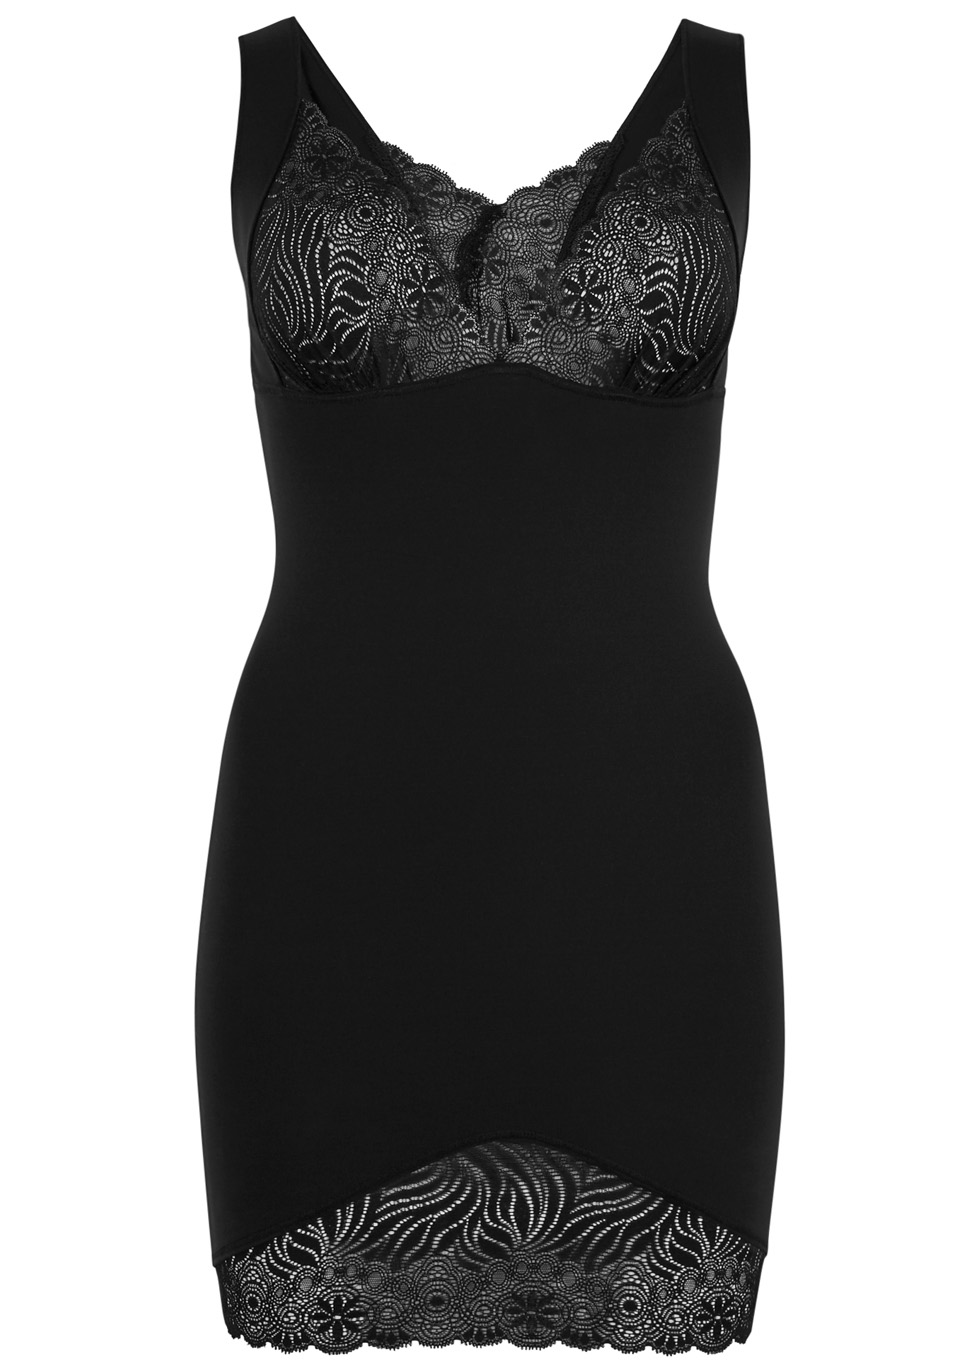 Simone Pérèle Top Model black shaping dress - Harvey Nichols